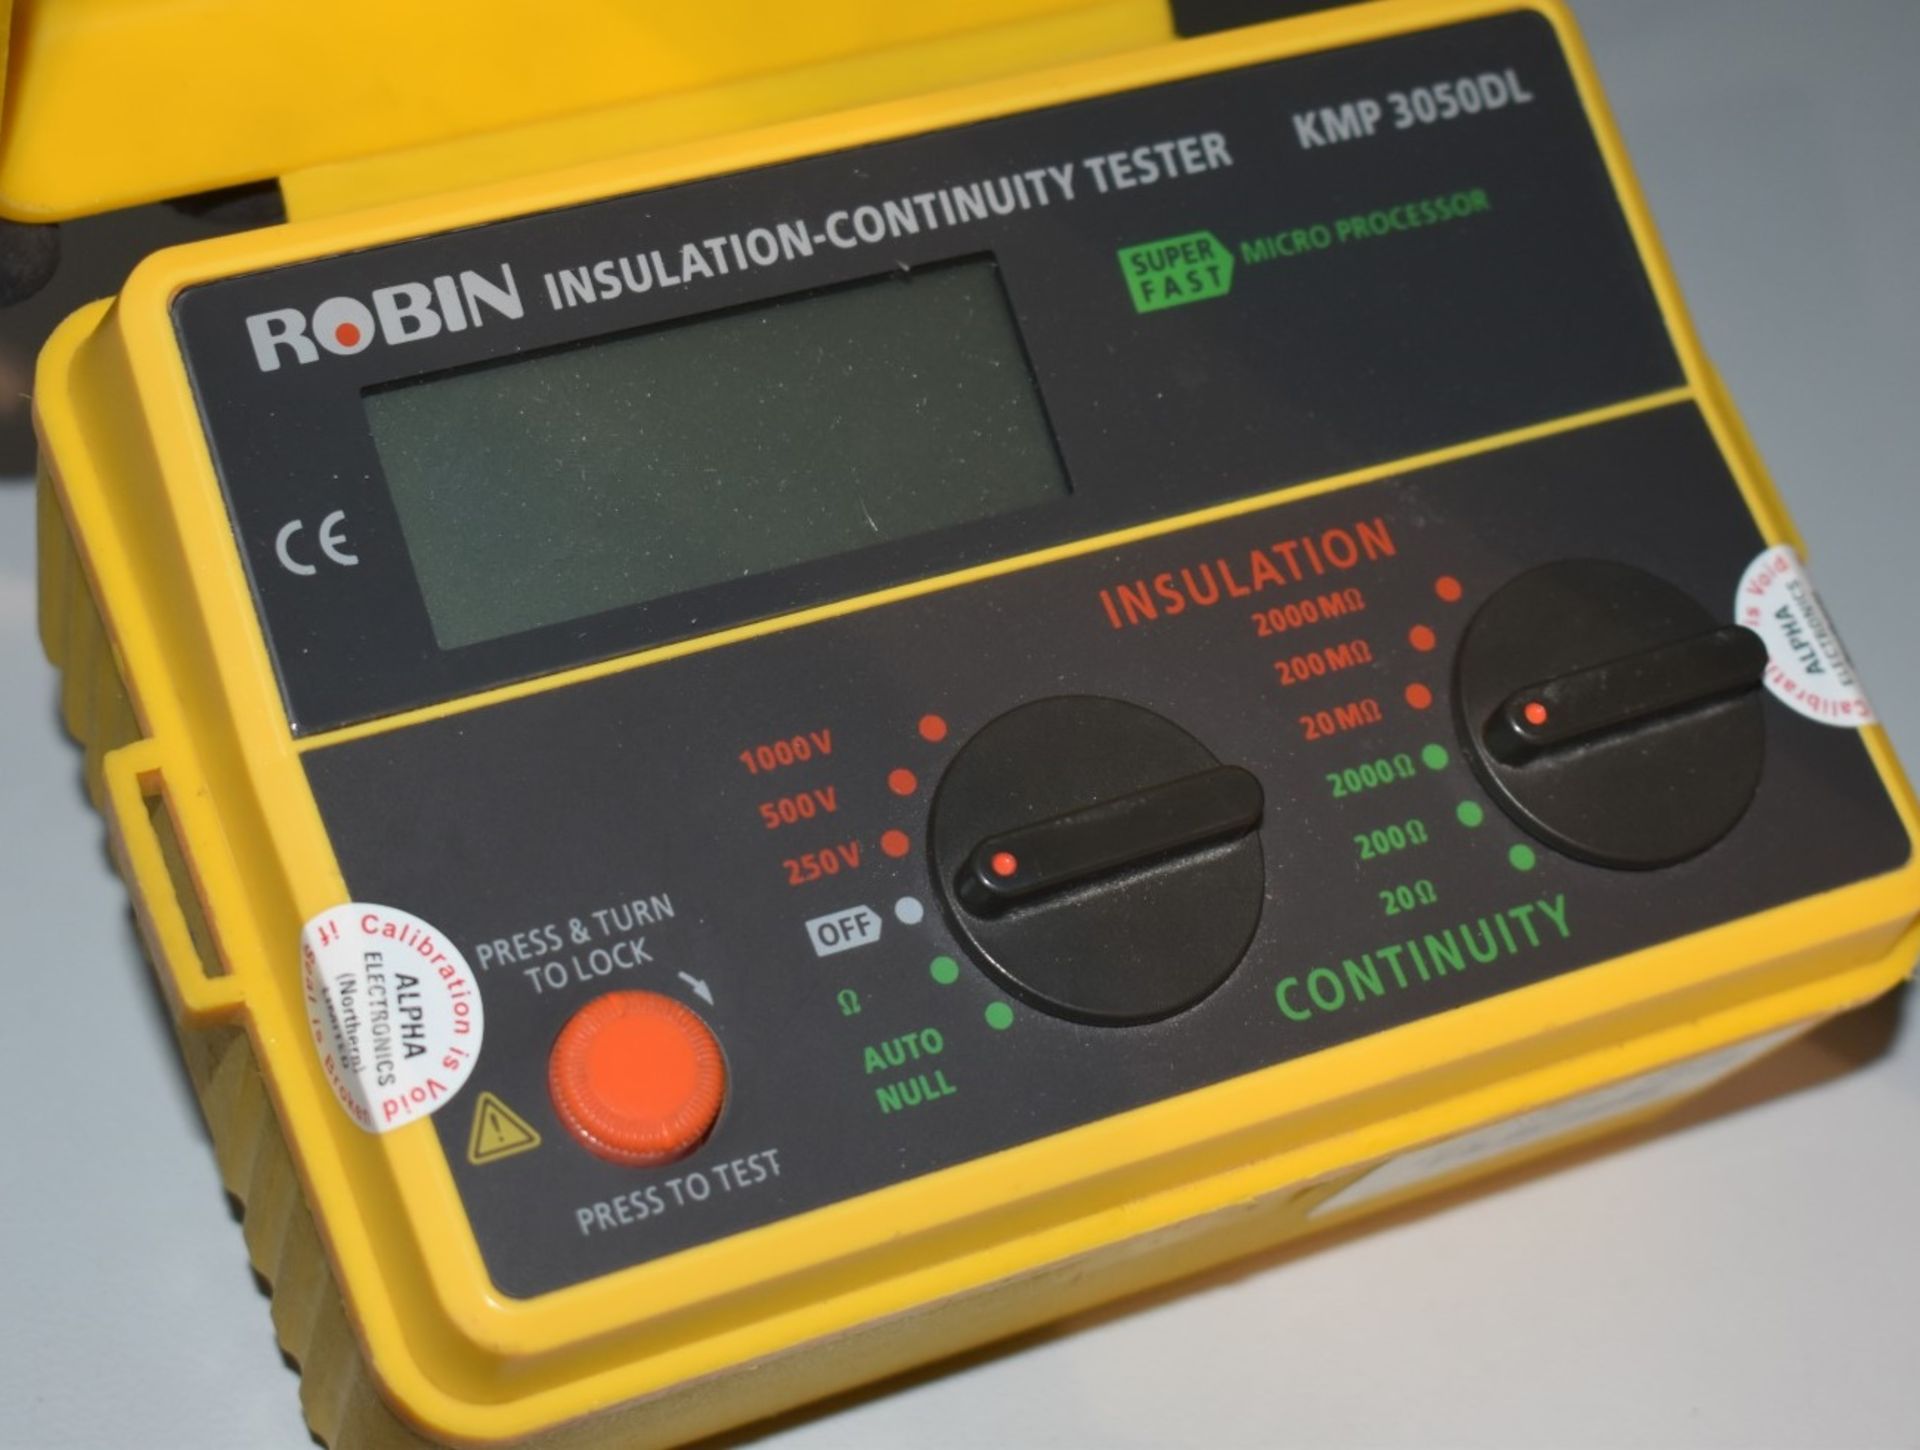 1 x Robin Insulation Continuity Tester Model KMP 3050DL  PME307